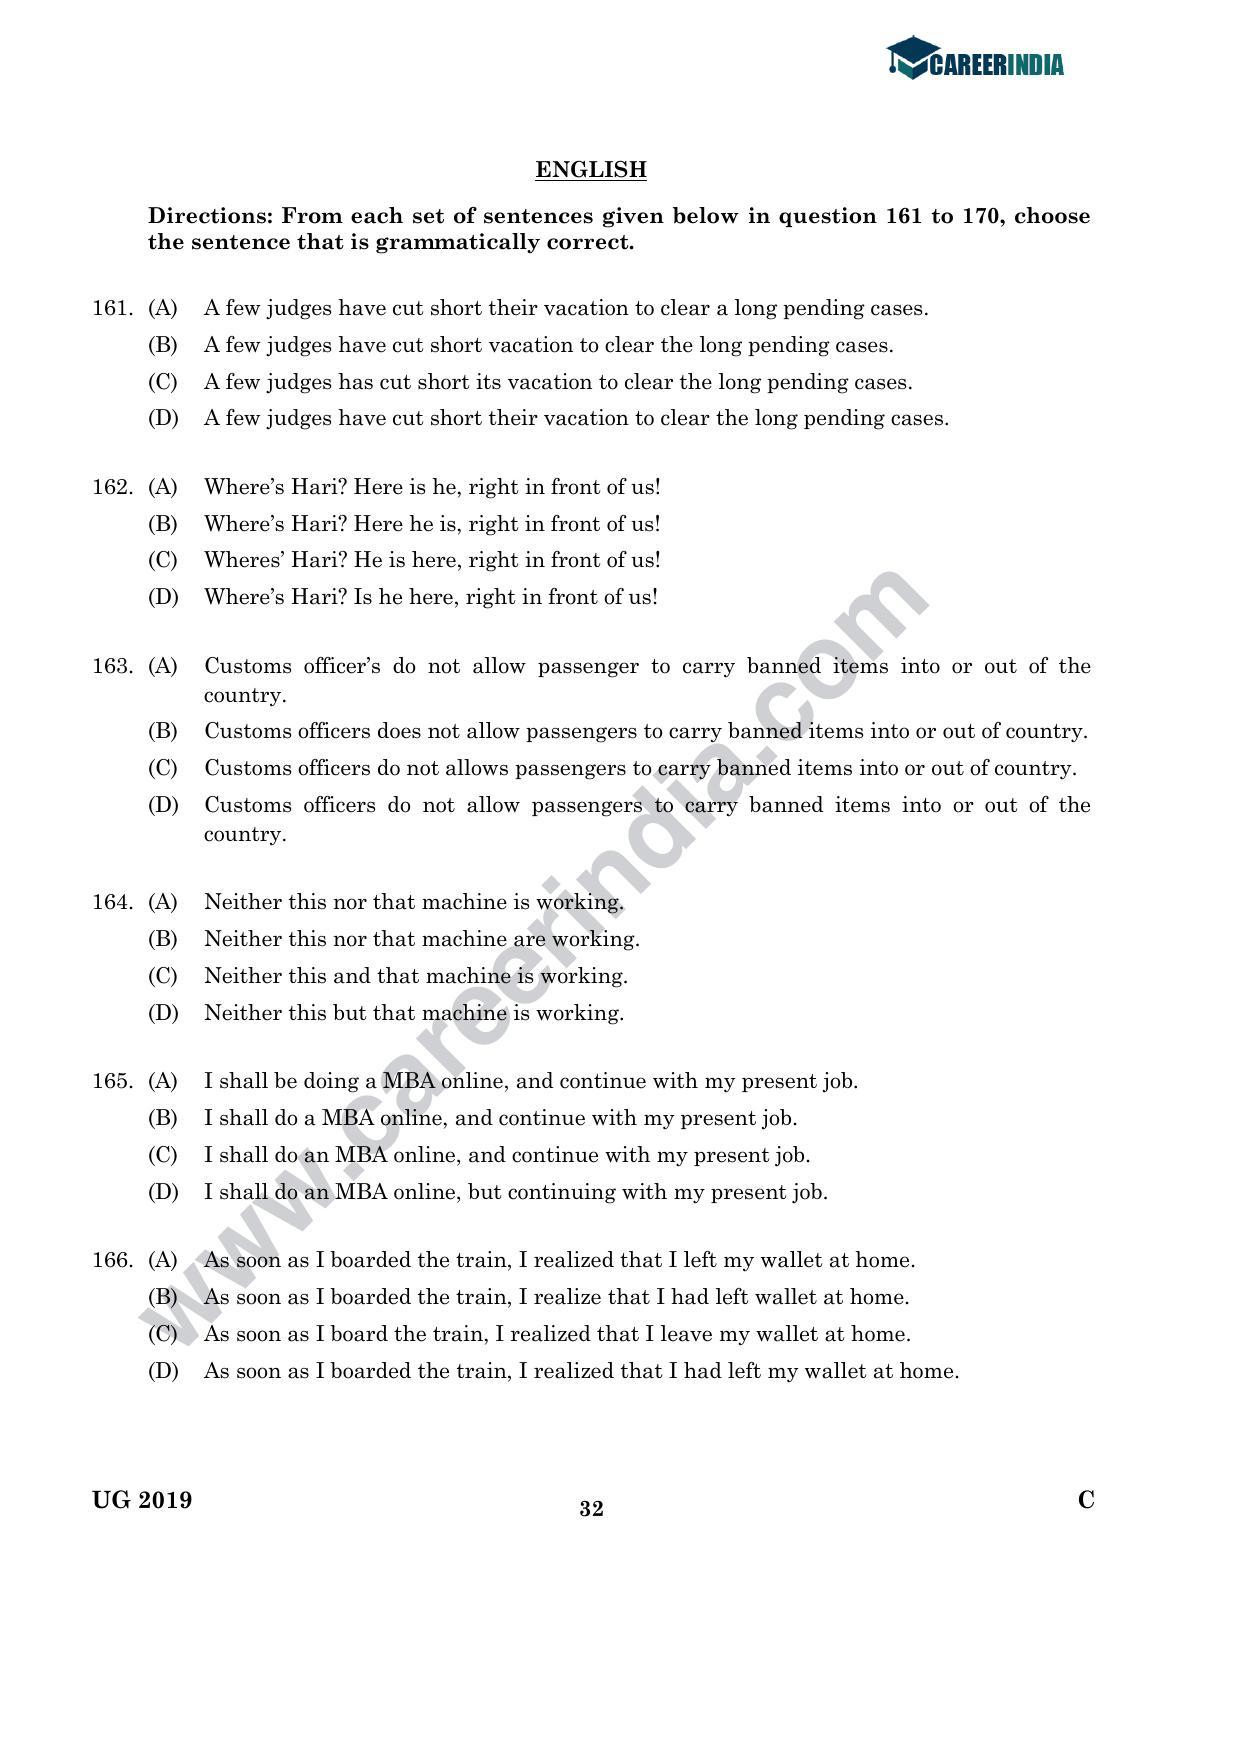 CLAT 2019 UG Legal-Aptitude Question Paper - Page 31